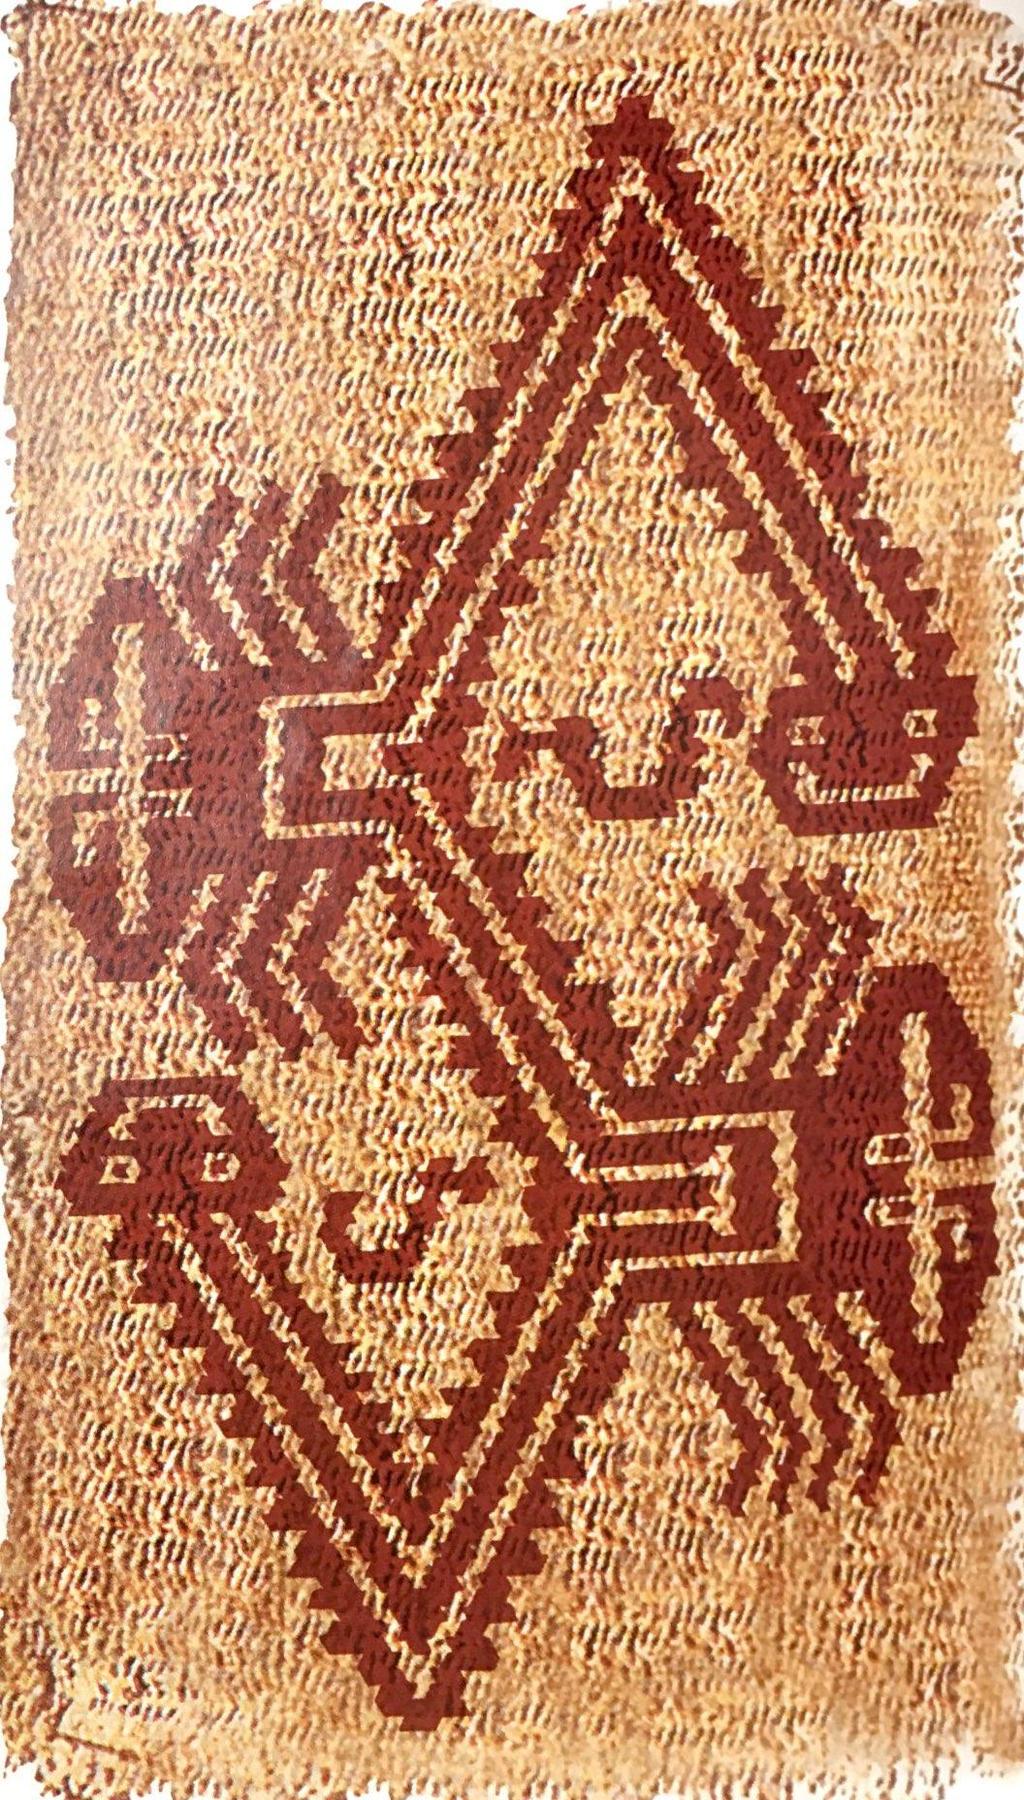 Moche Ceramic Textile from